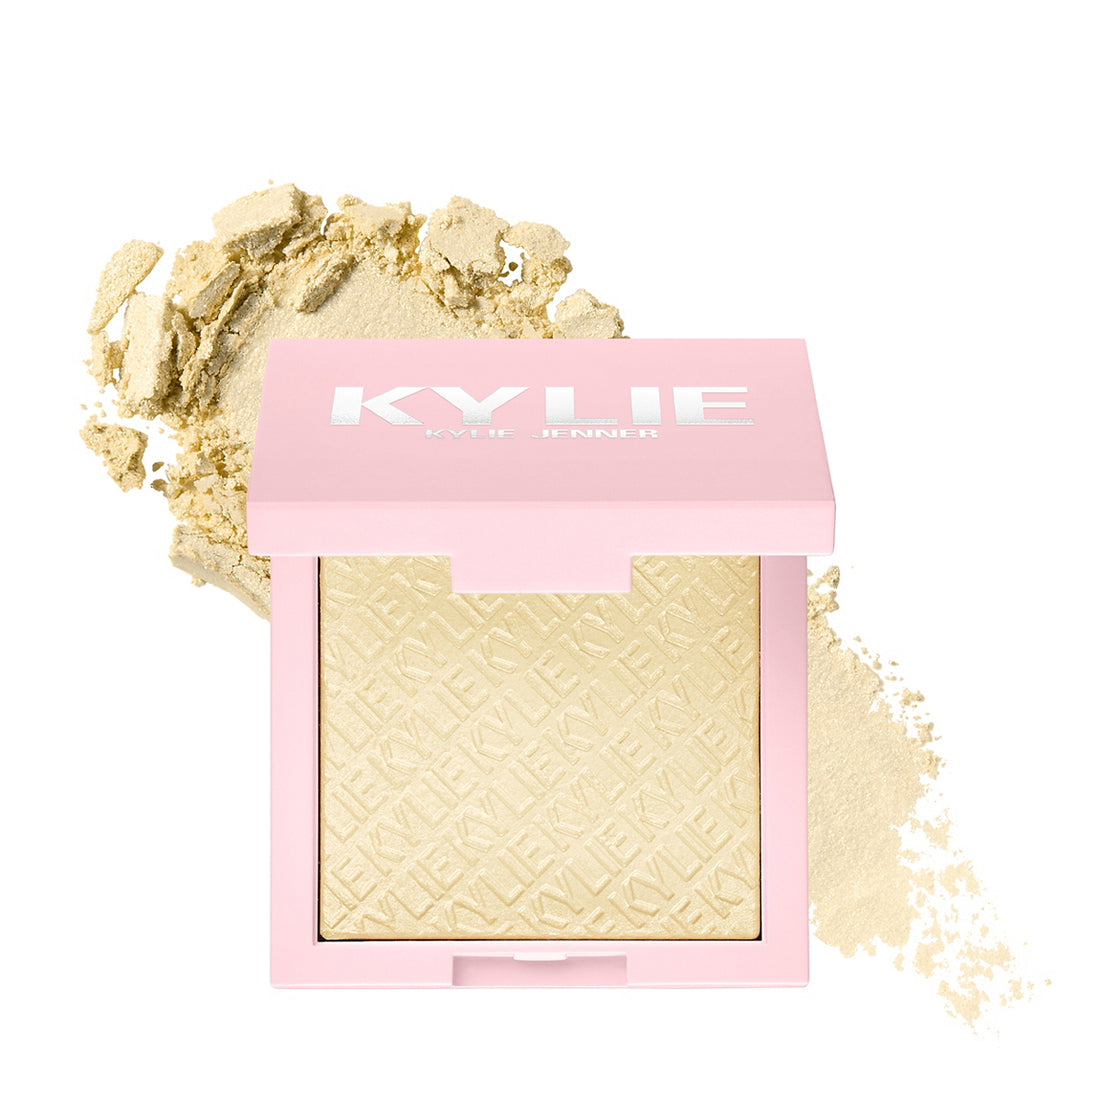 010 Quartz Kylighter Pressed Iluminating Powder - Kylie Cosmetics.